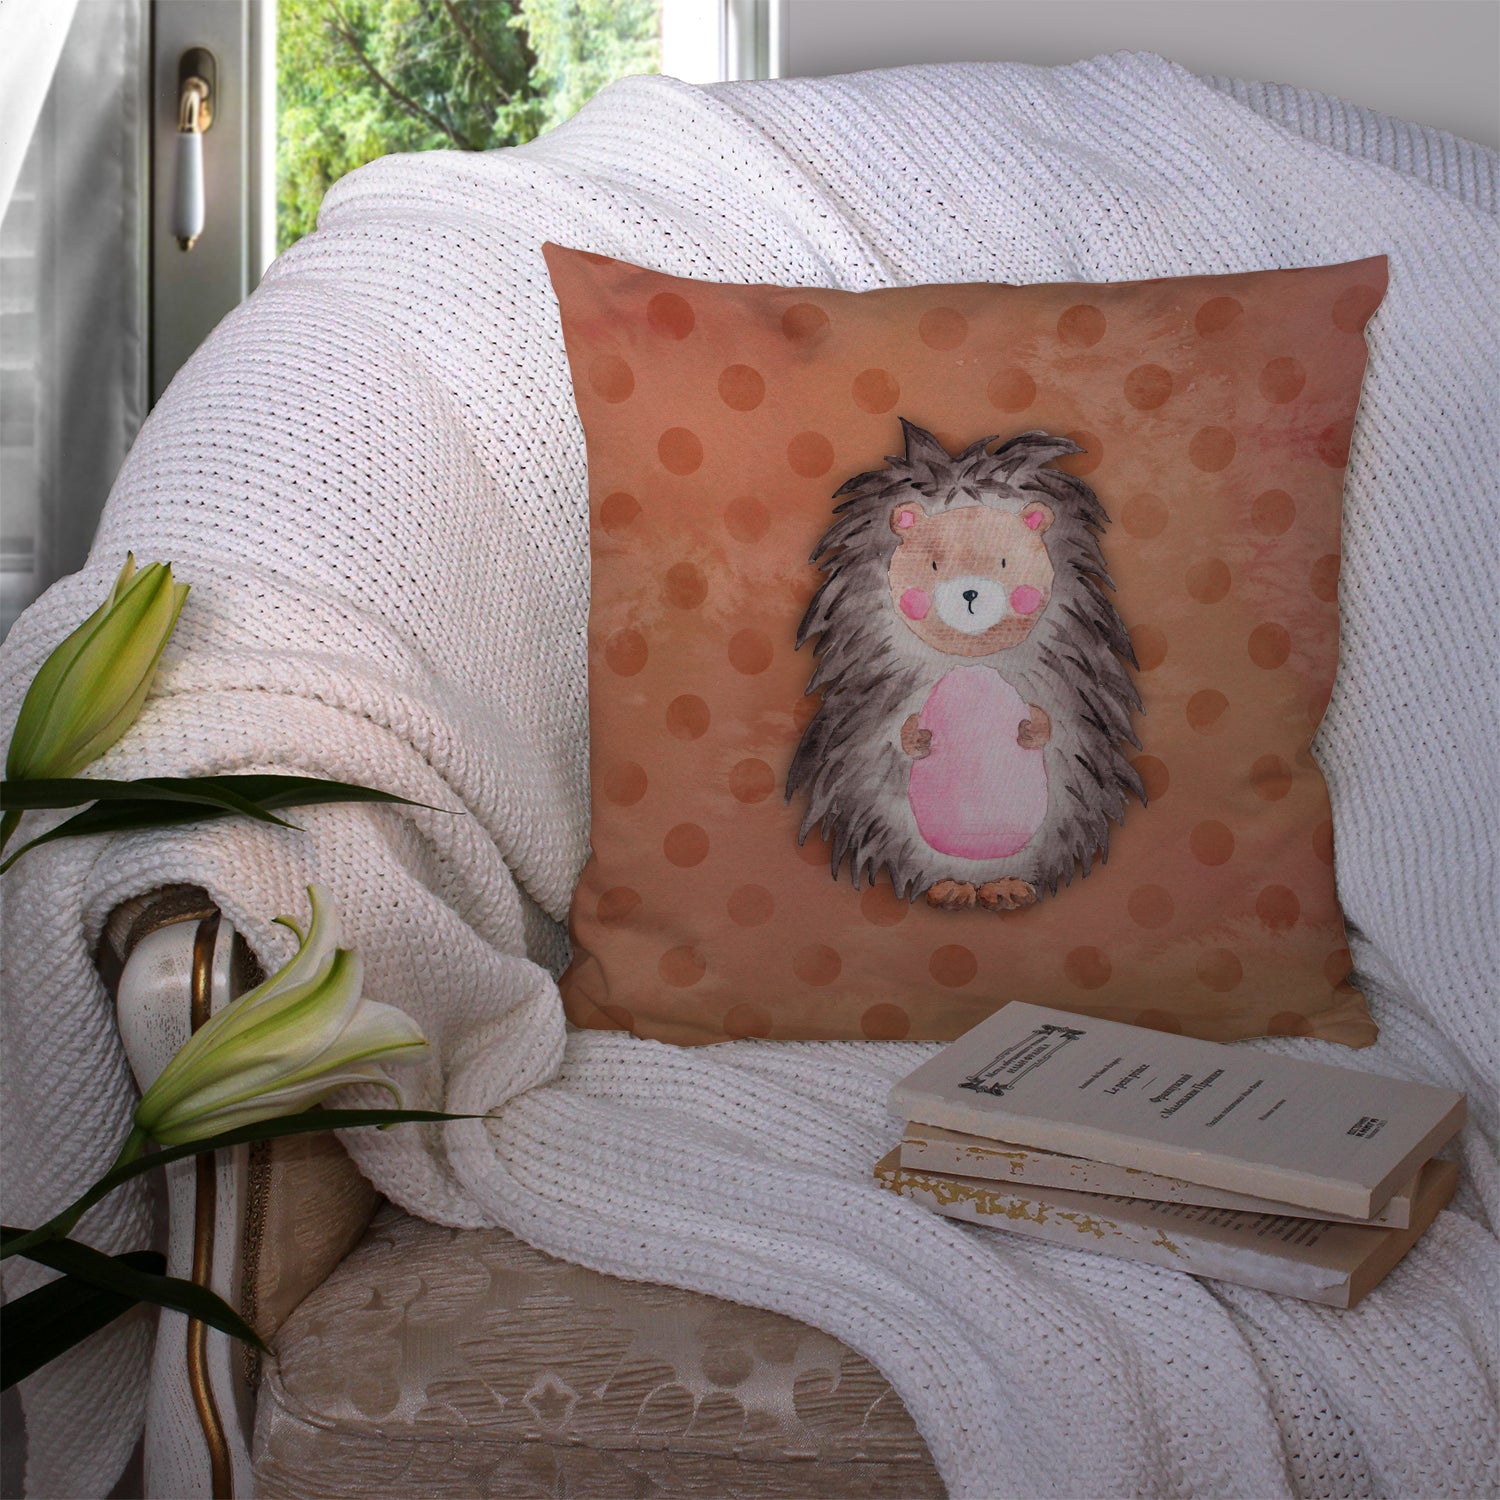 Polkadot Hedgehog Watercolor Fabric Decorative Pillow BB7378PW1414 - the-store.com